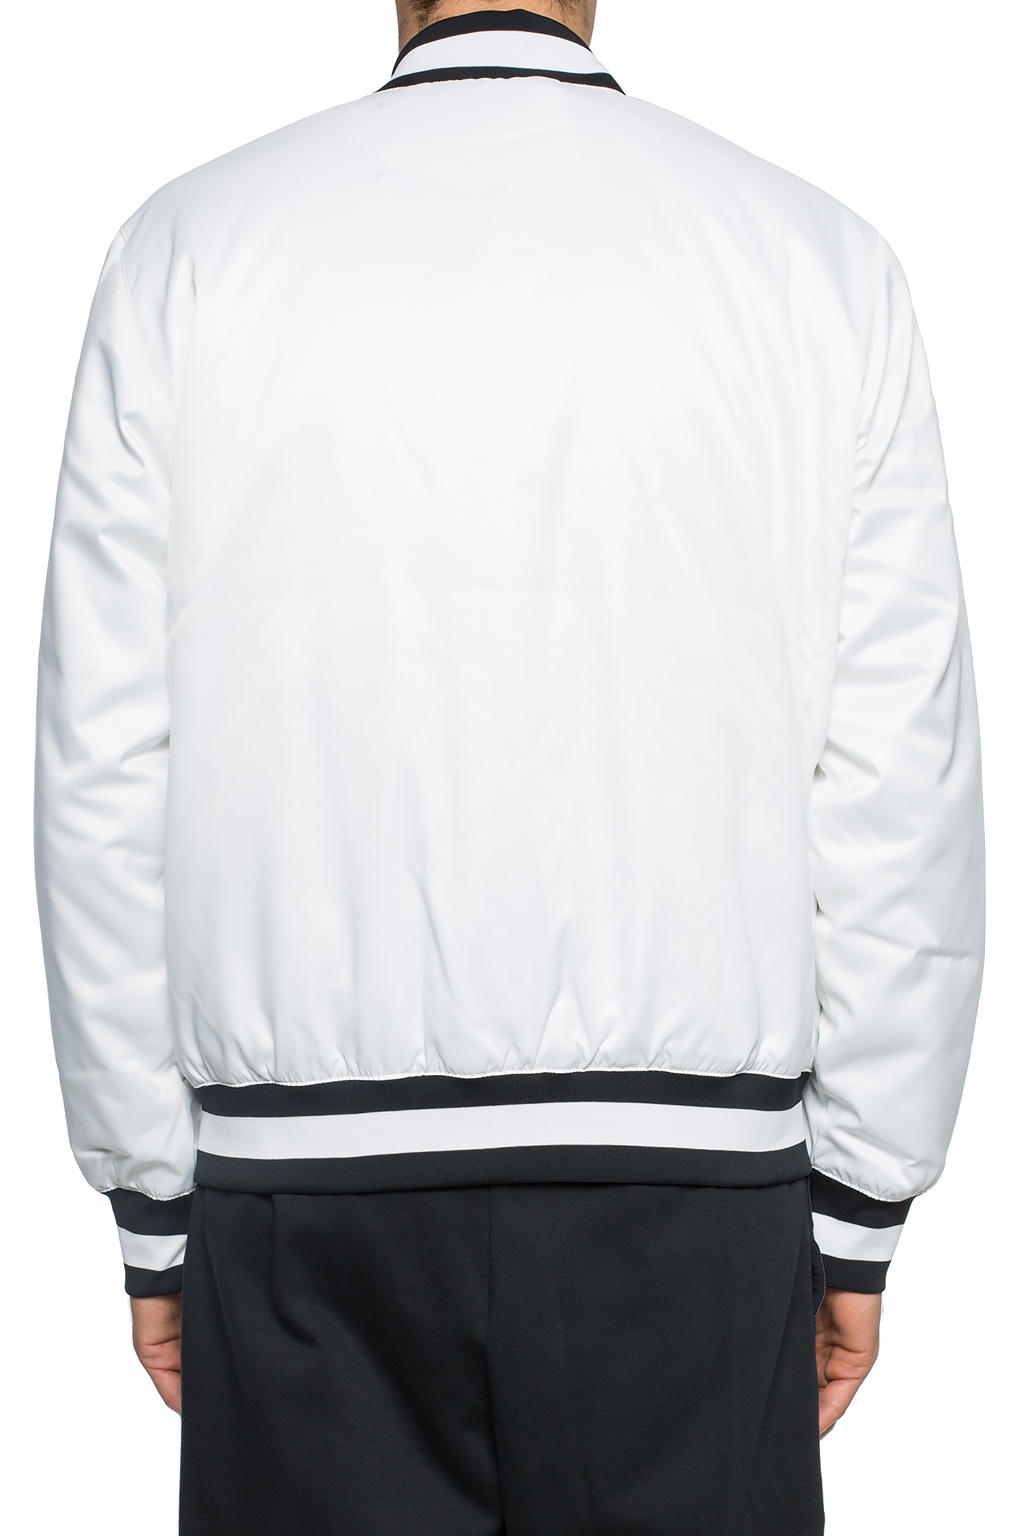 Nike SB X NBA Bomber Jacket White, AH3392-100